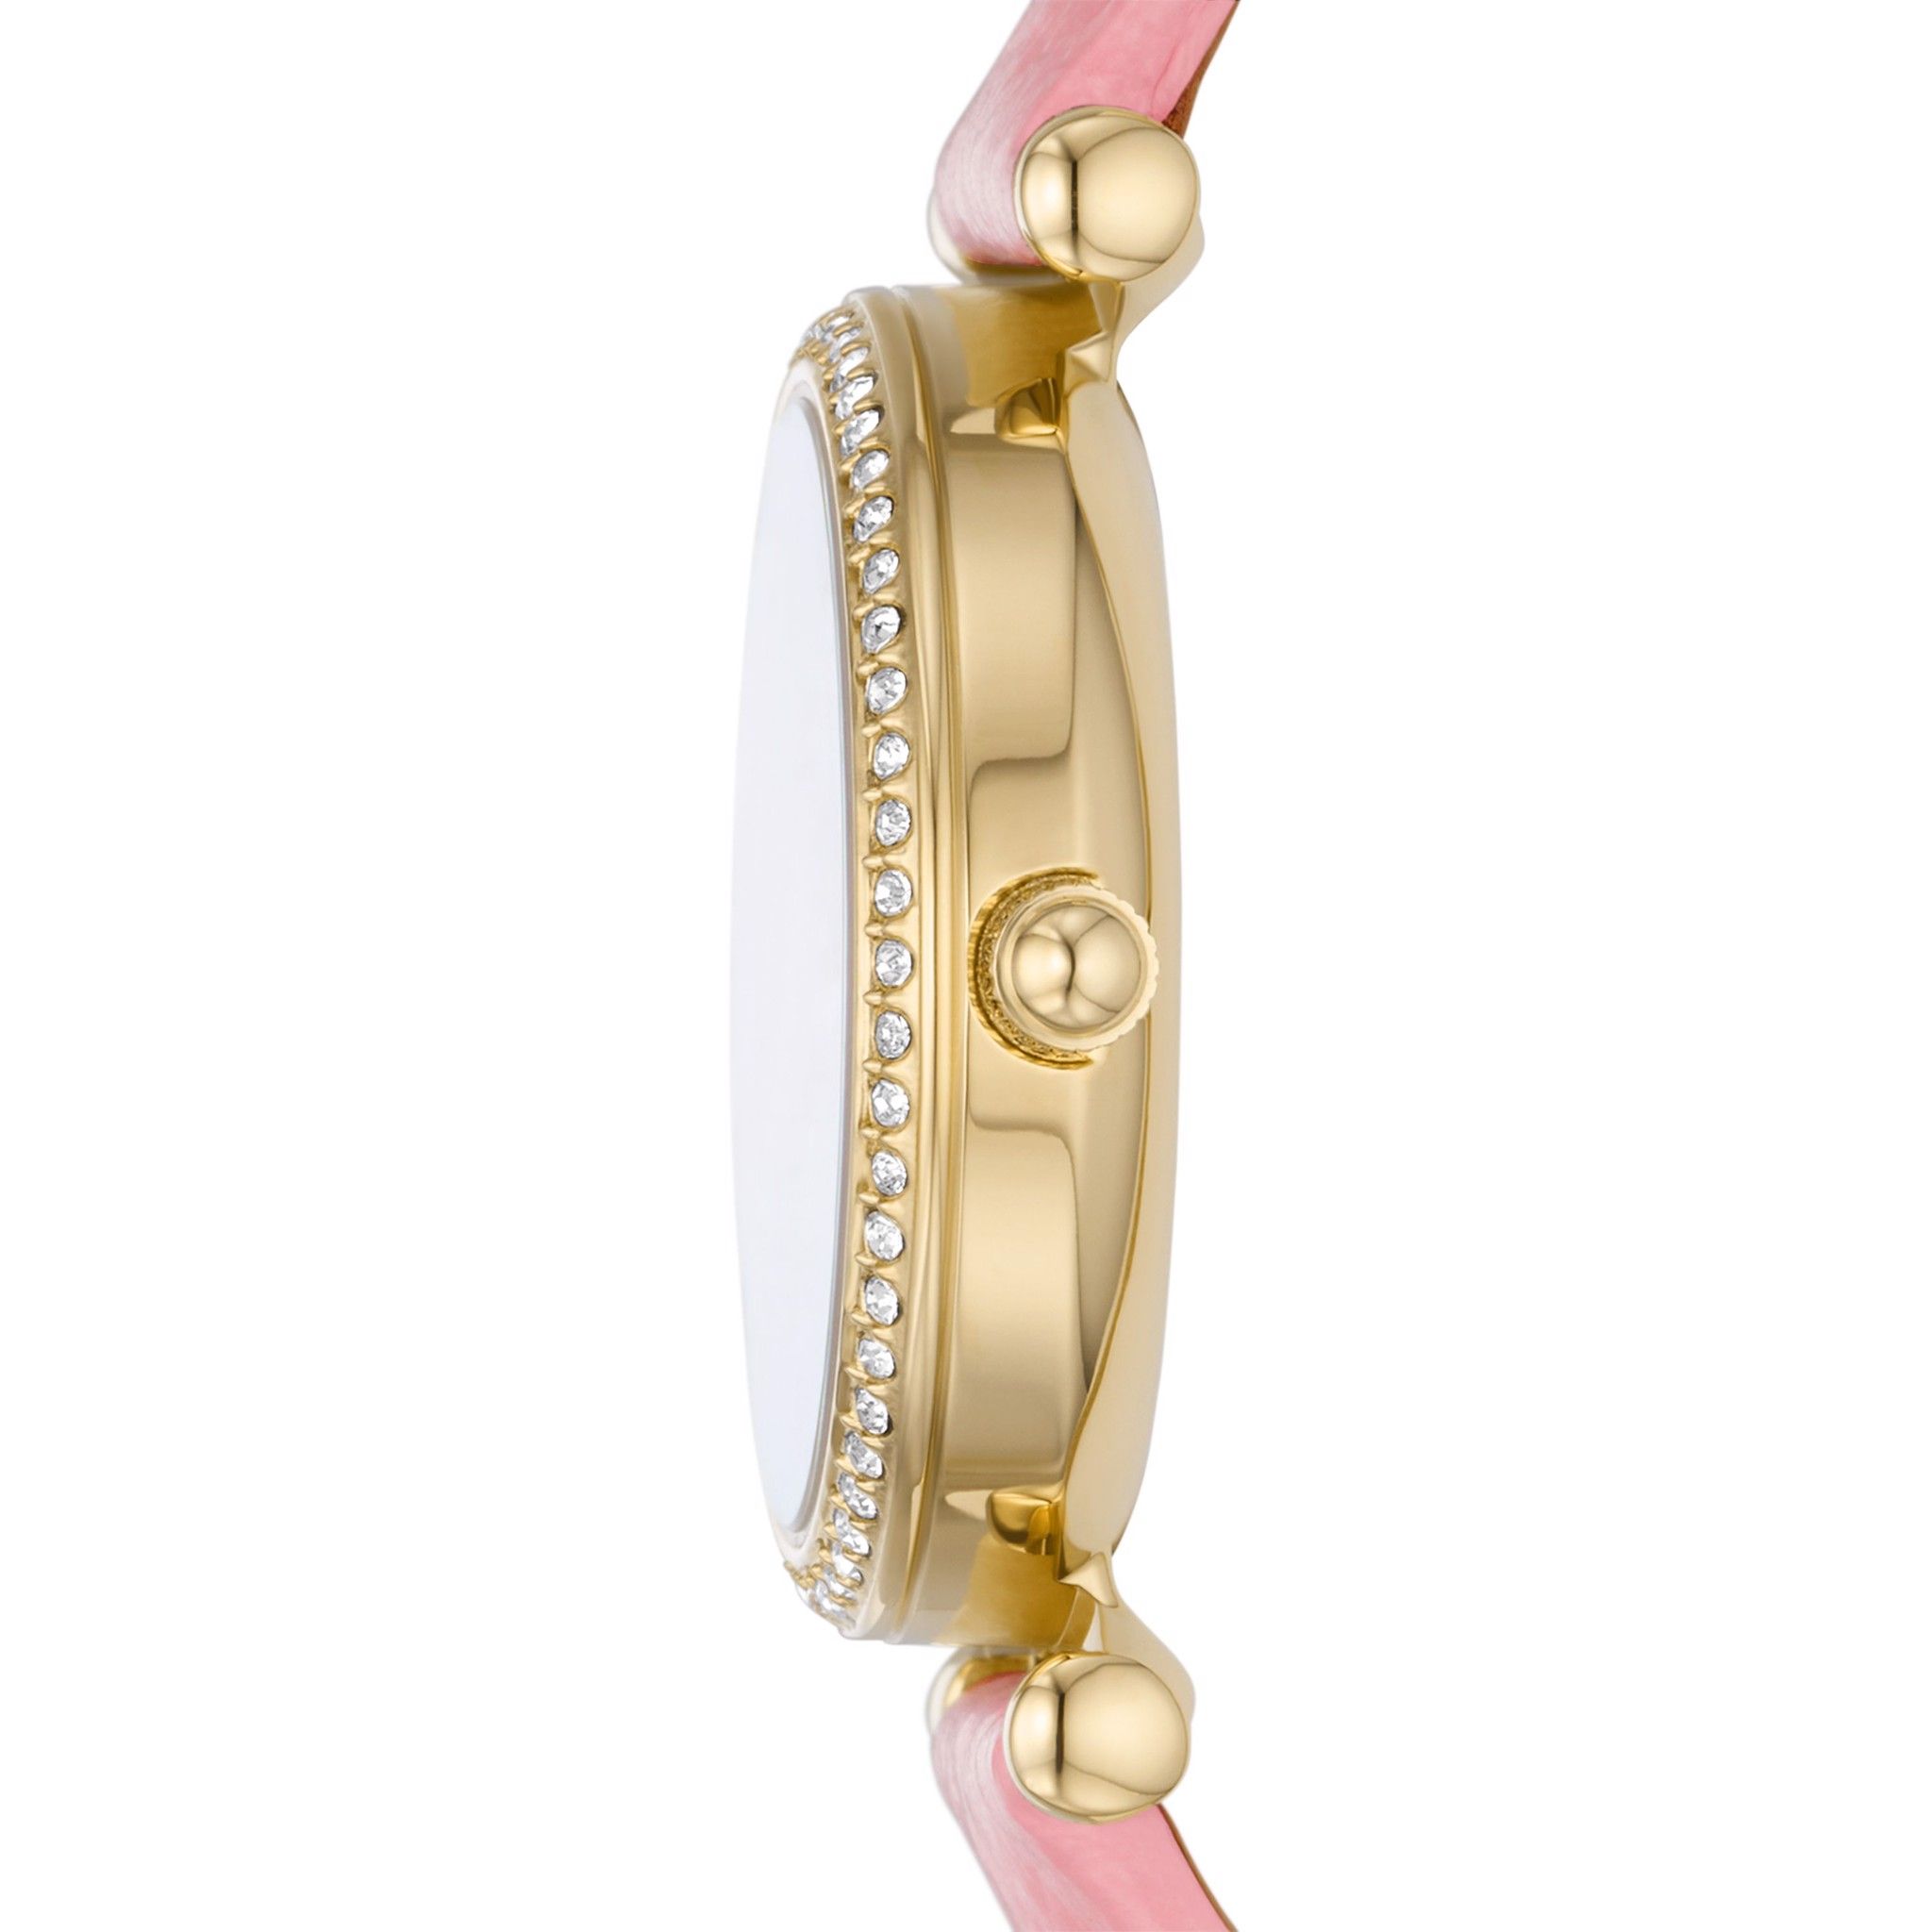  Đồng hồ nữ dây da Fossil Carlie ES5177- màu hồng 